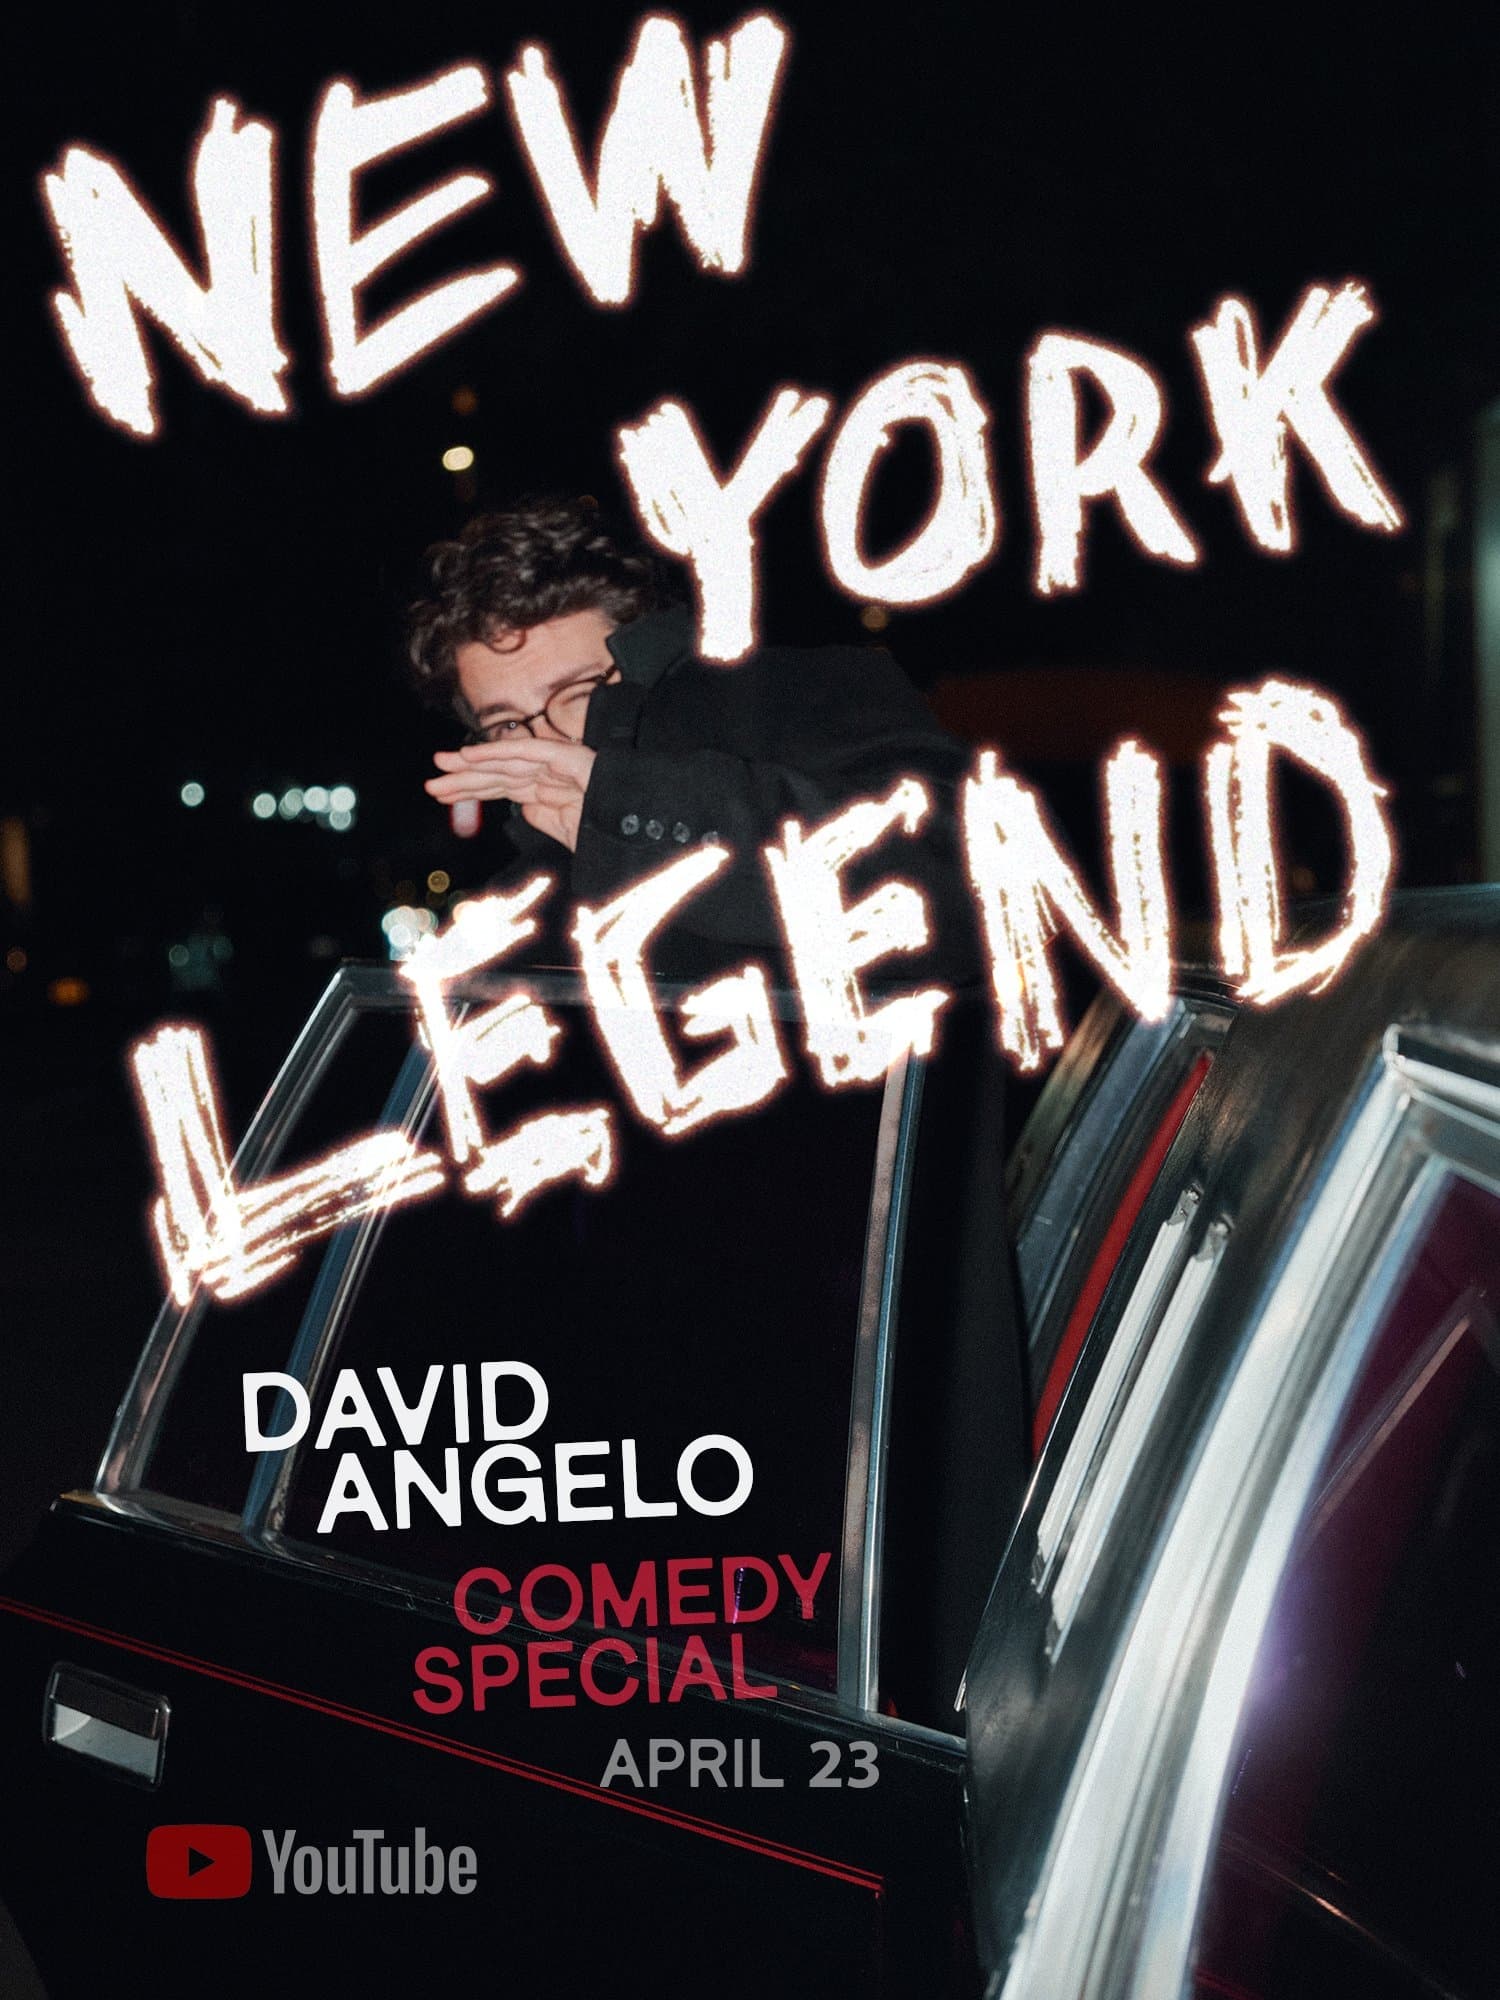 David Angelo: New York Legend